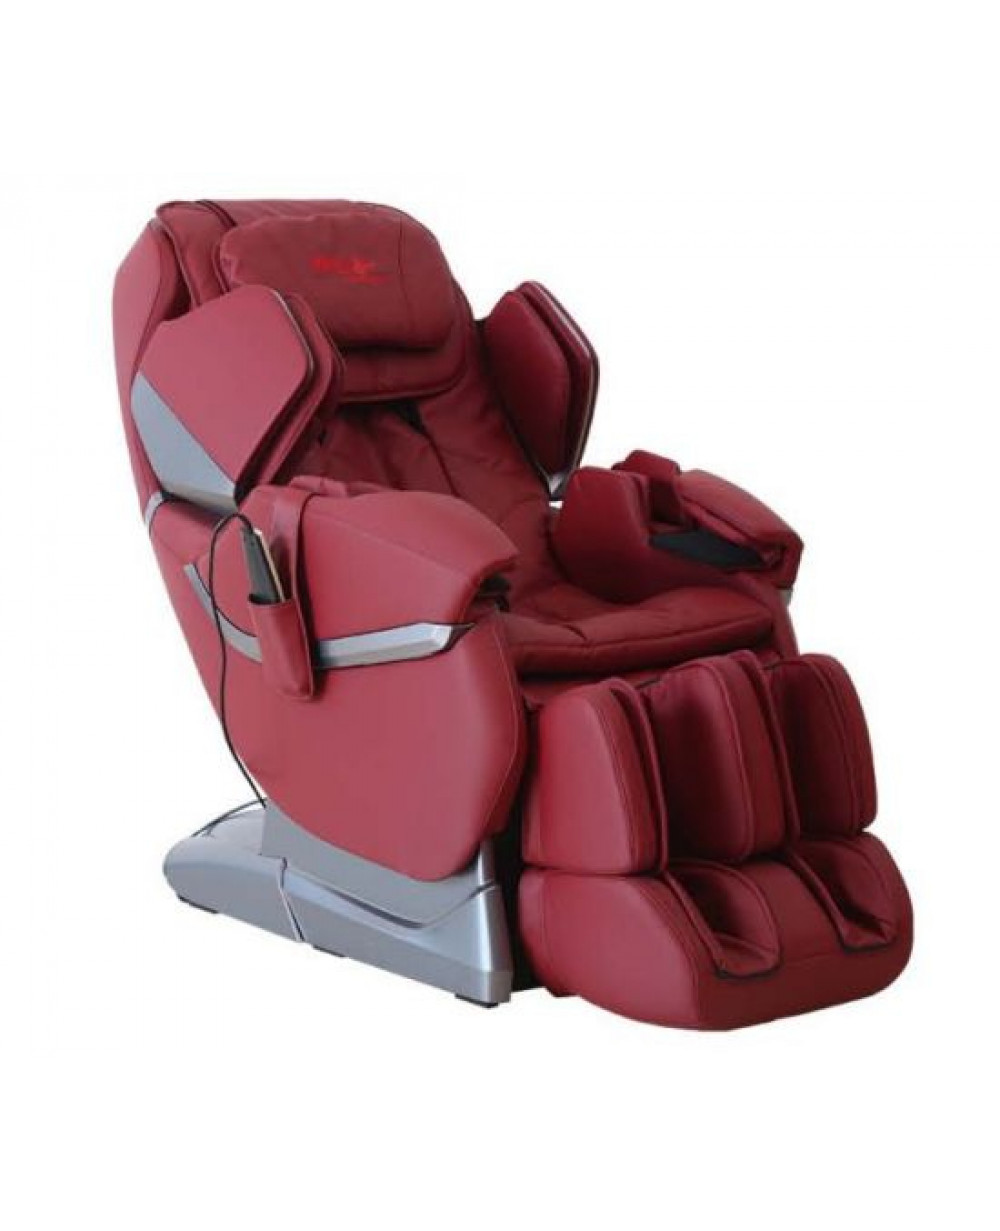 Wnq Full Body Massage Chair A1